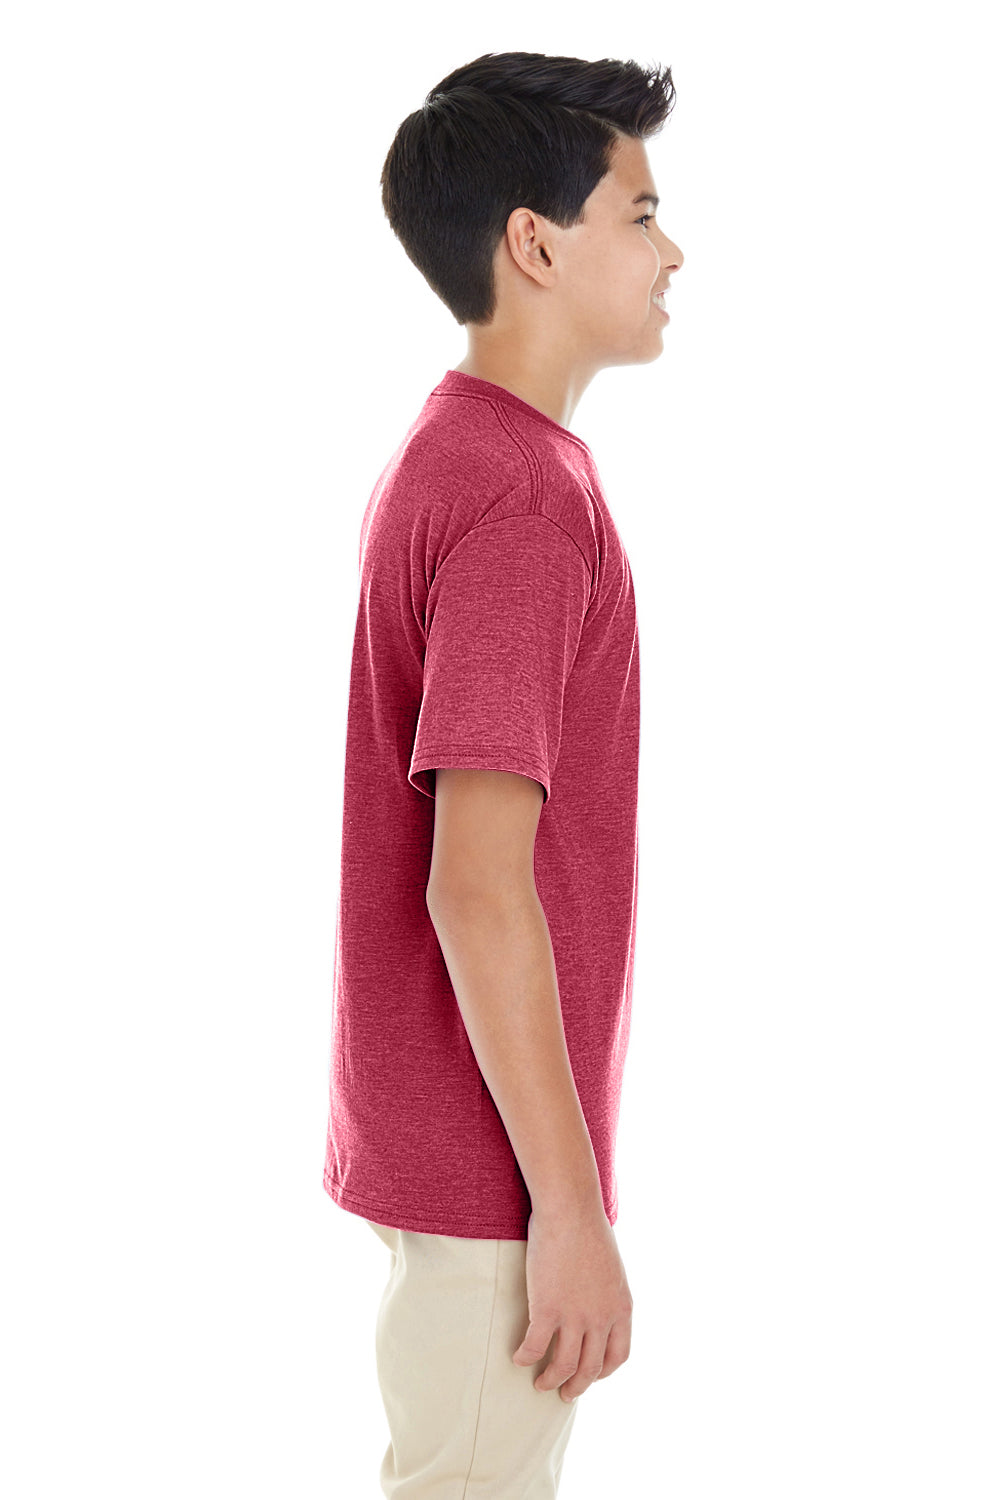 Gildan G645B Youth Softstyle Short Sleeve Crewneck T-Shirt Heather Cardinal Red Side